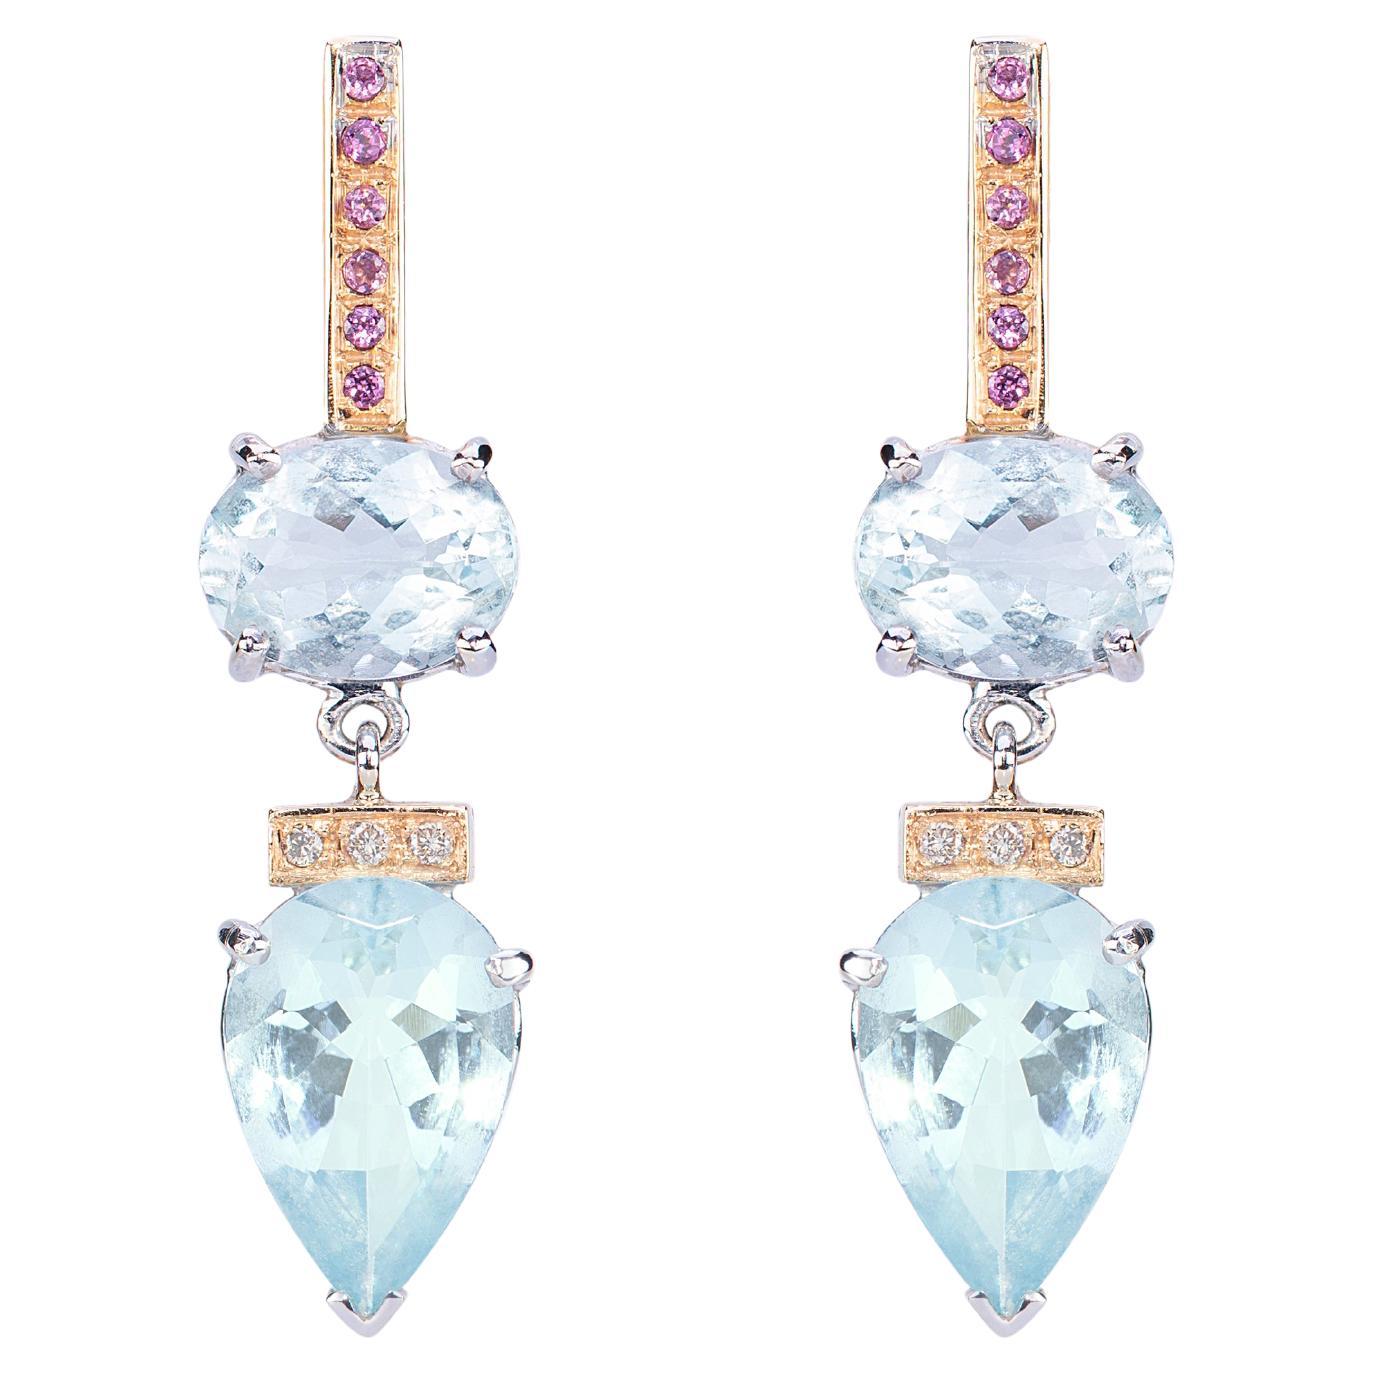 Rossella Ugolini Pendants d'oreilles en or 18 carats avec aigue-marine et diamants de 9,70 carats